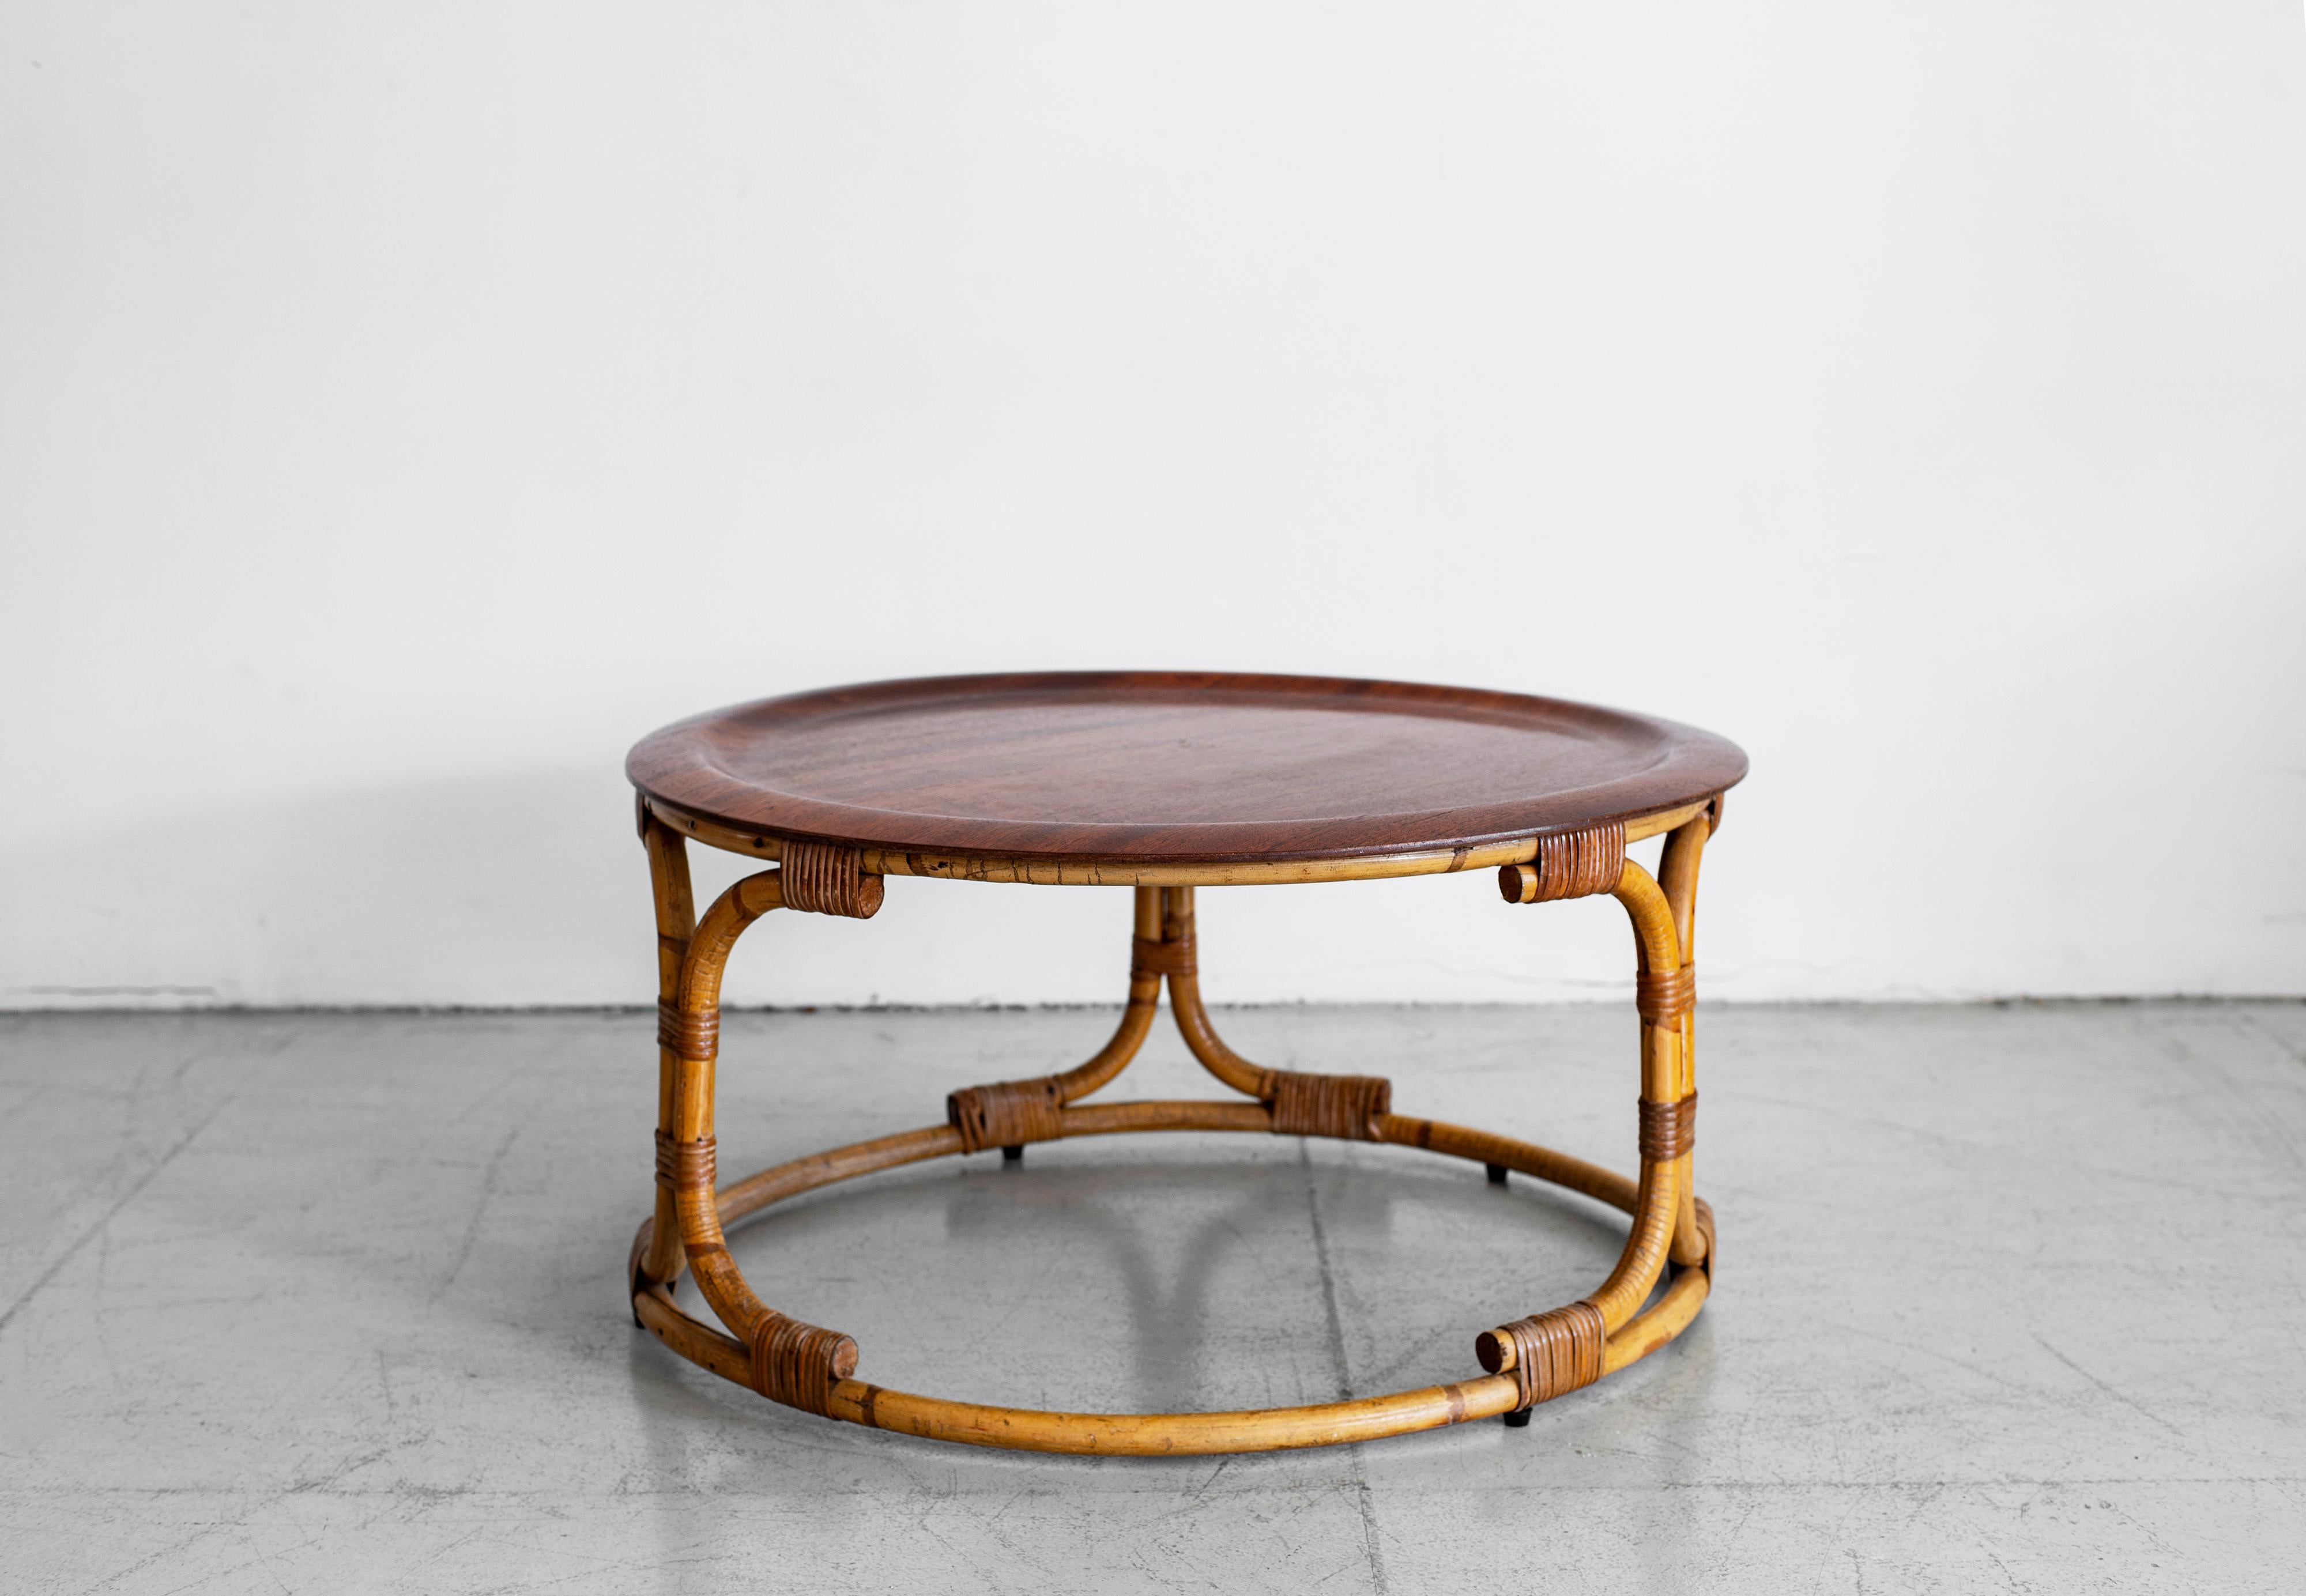 Italian coffee table by Bonacina with sculptural rattan base and circular wood top.